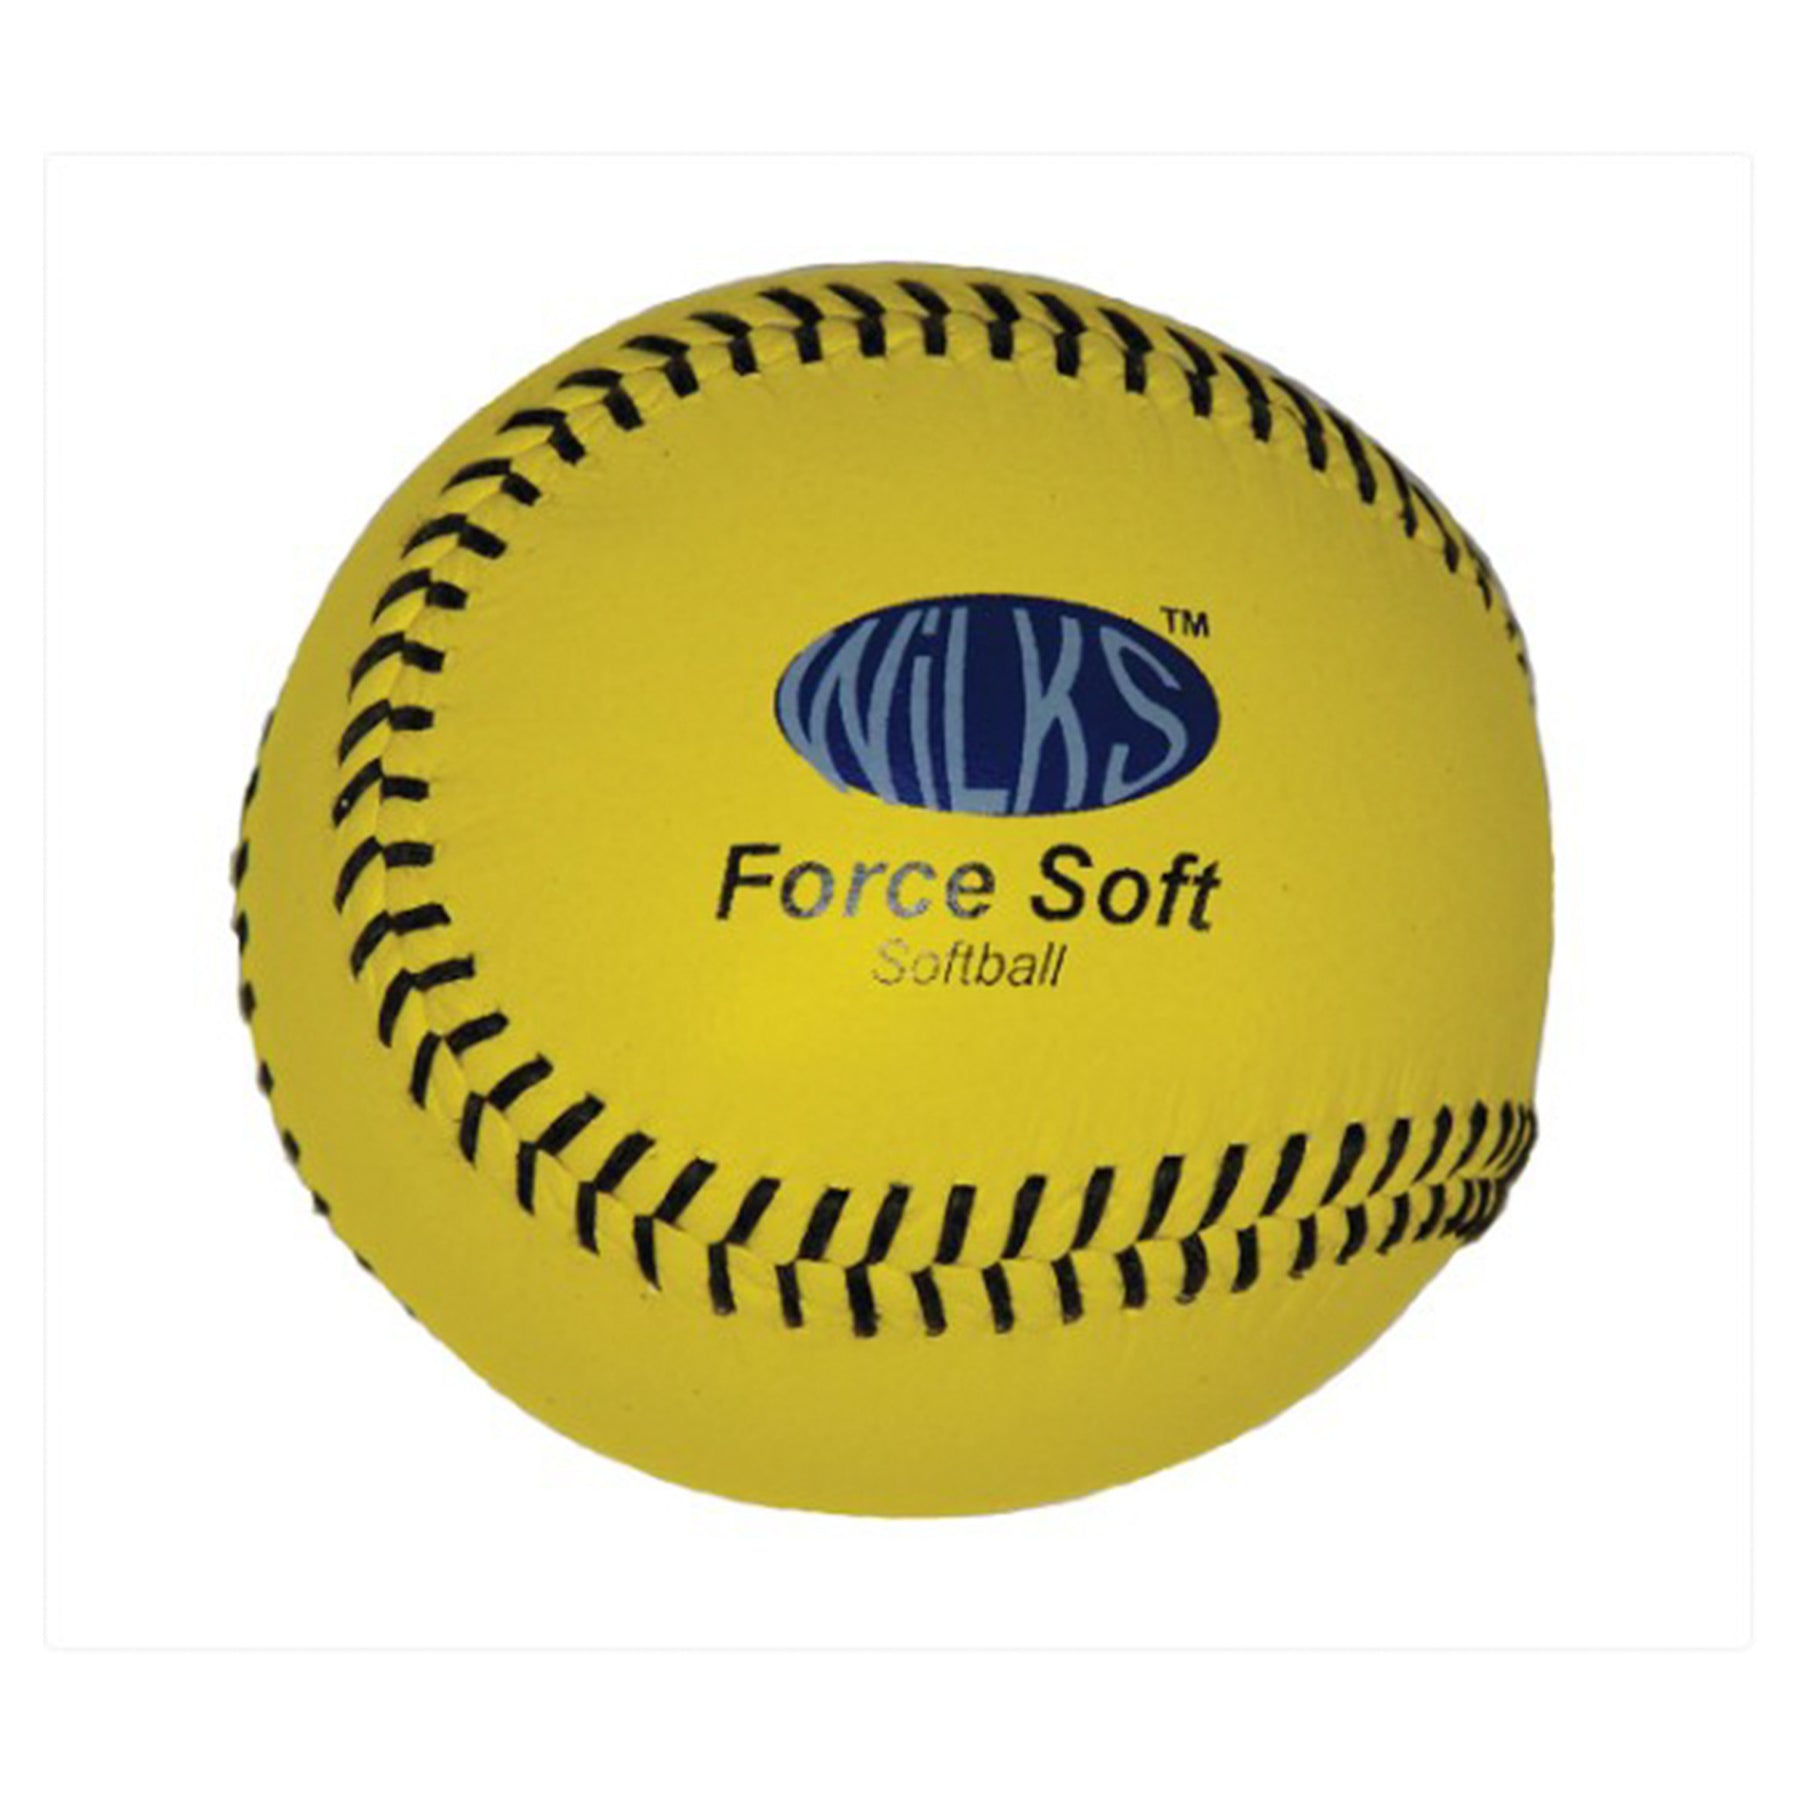 Softball Force Soft Training